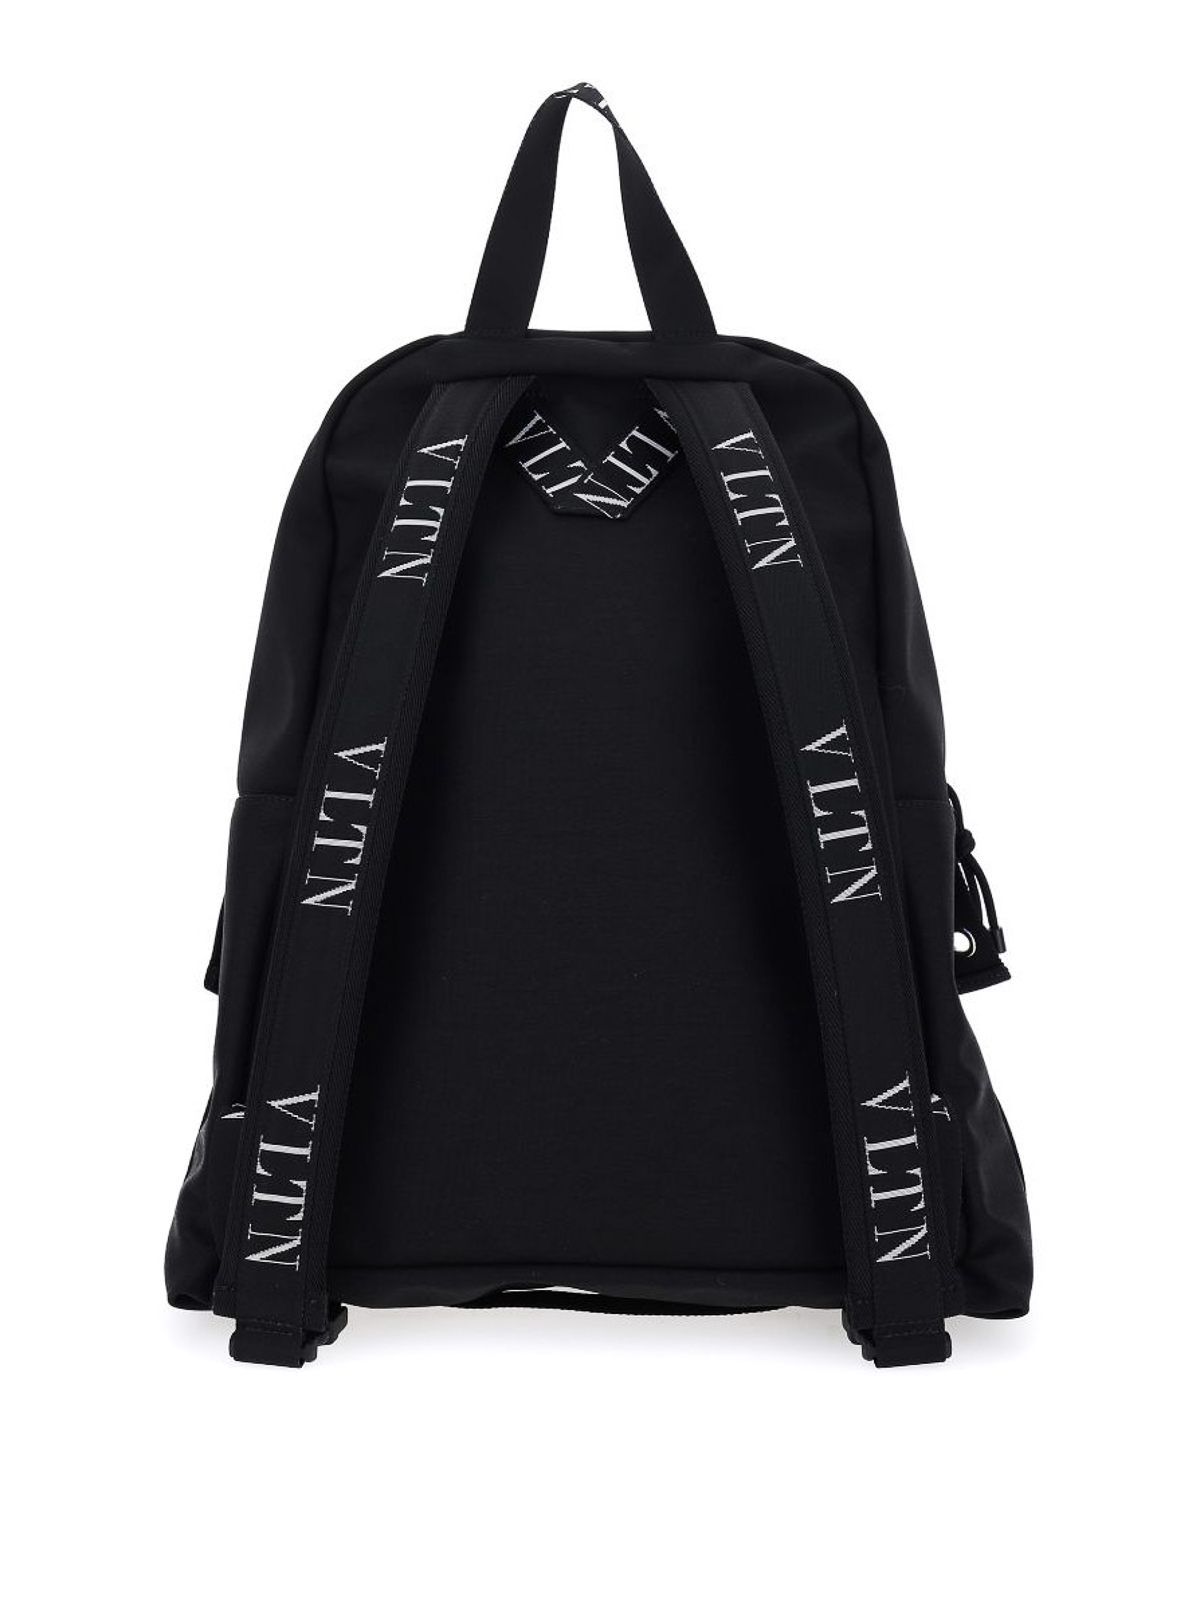 Backpacks Valentino Garavani - VLTN backpack - UY2B0993YHS0NI | iKRIX.com